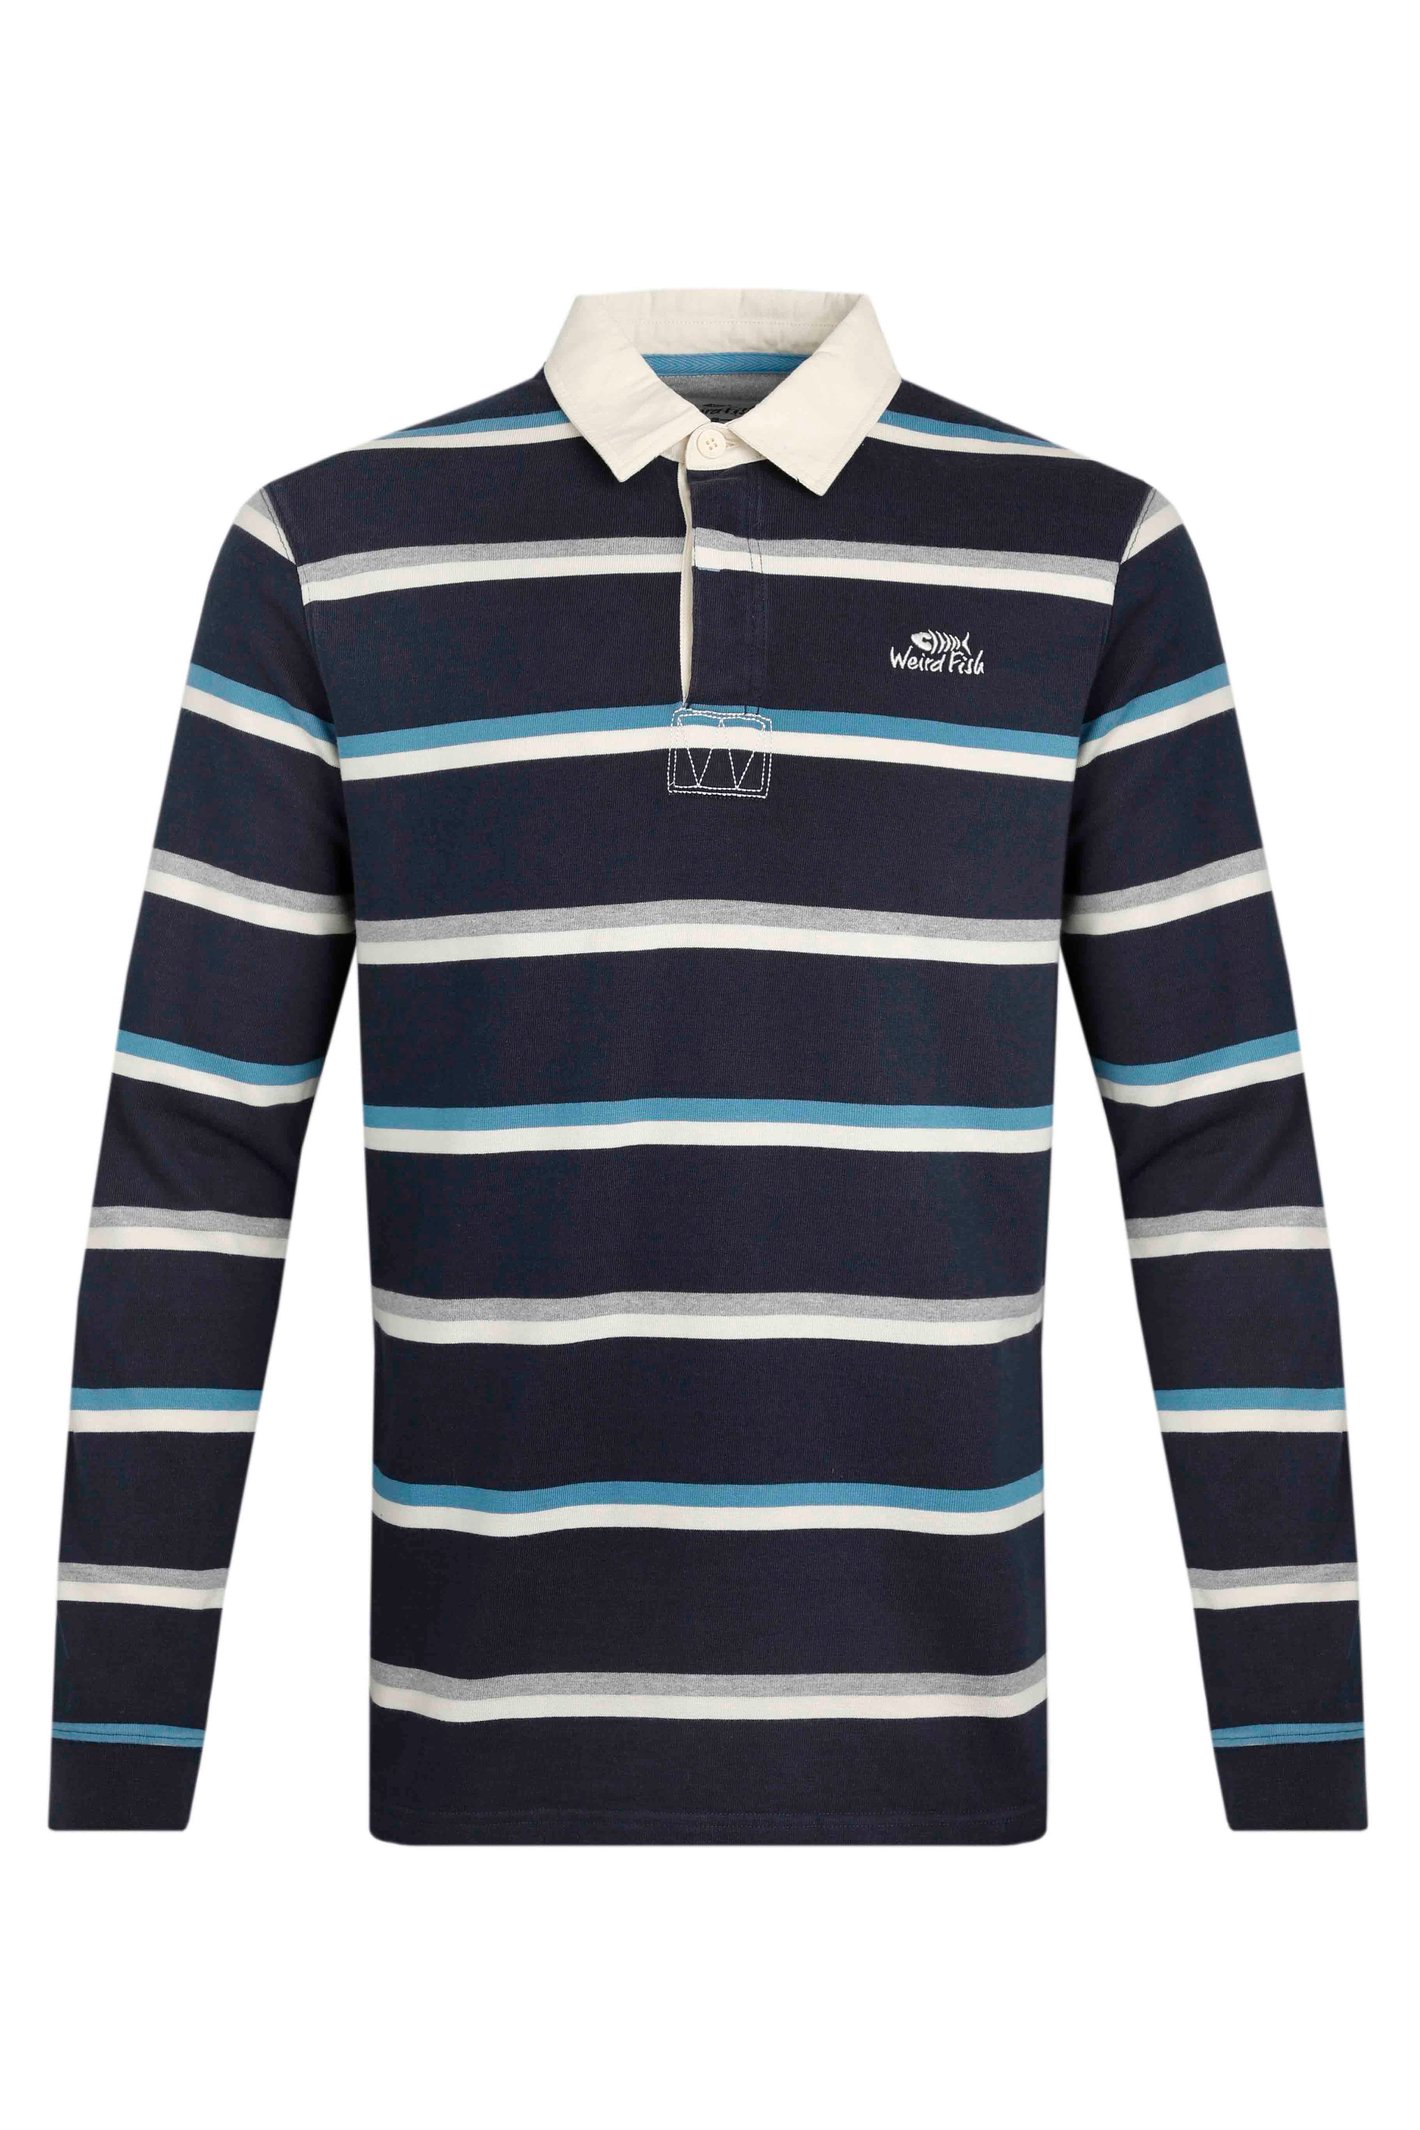 Weird Fish Laxton Organic Long Sleeve Stripe Rugby Shirt Navy Blue Size S